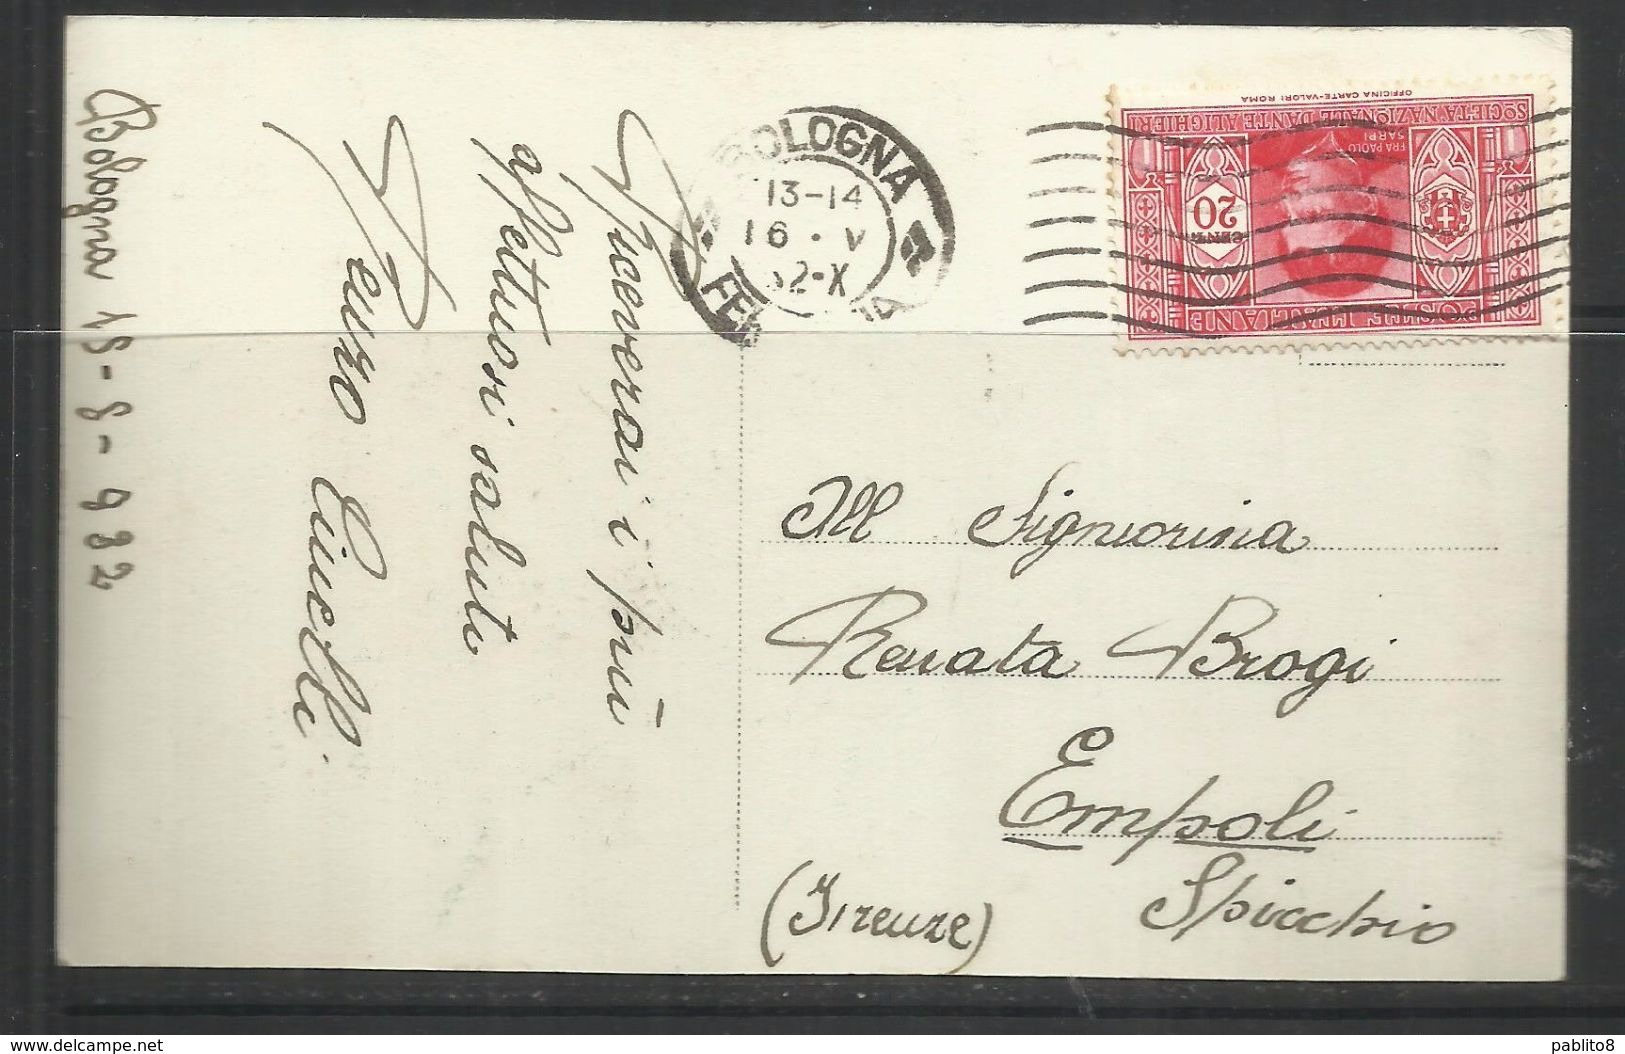 ITALIA REGNO ITALY KINGDOM 16 5 1932 SERIE ROMANTICA CENT 20 SOCIETA' DANTE ALIGHIERI CARTOLINA POST CARD - Photographs